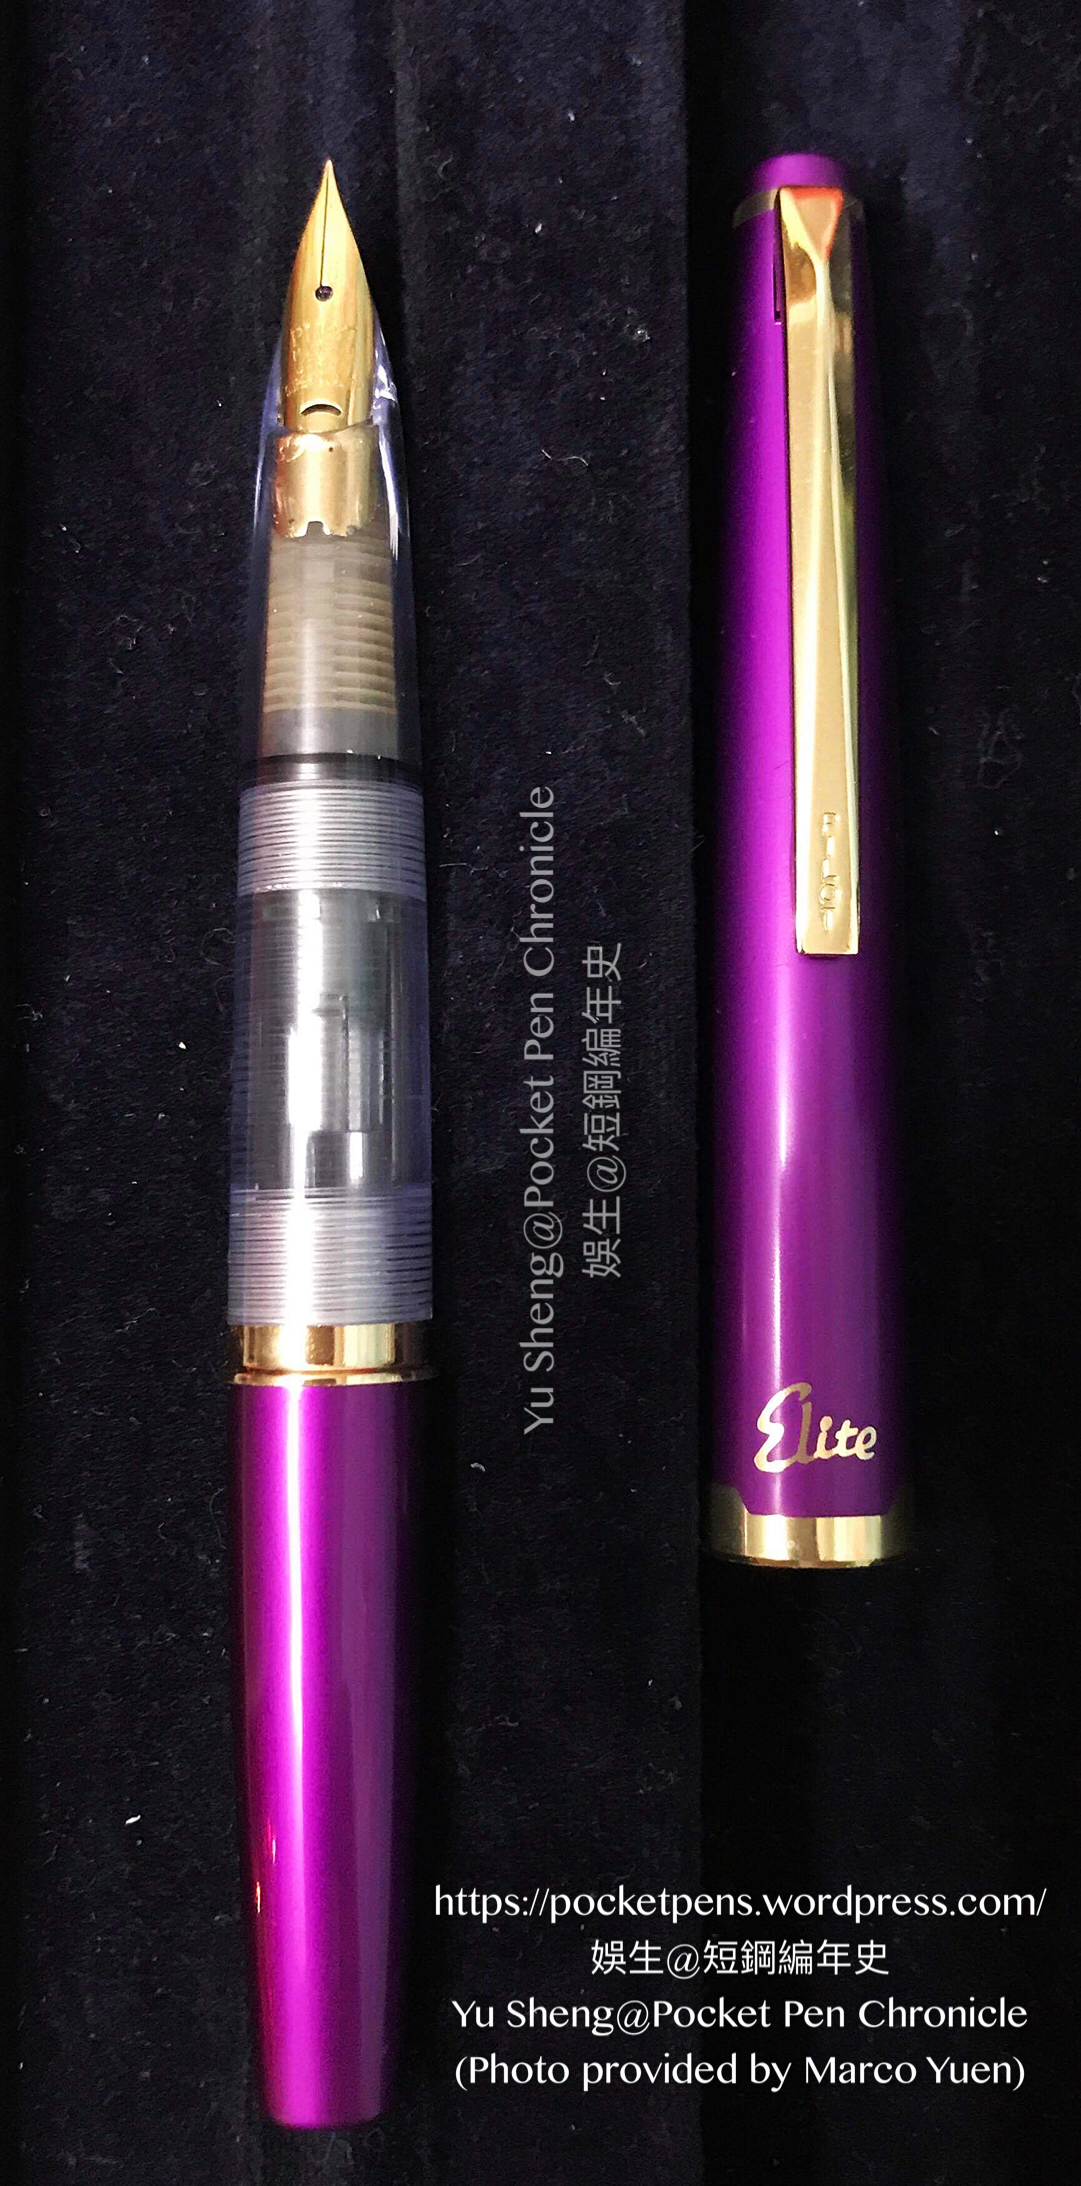 Purple KaraKara pocket pen, transparent section, gold-plated nib